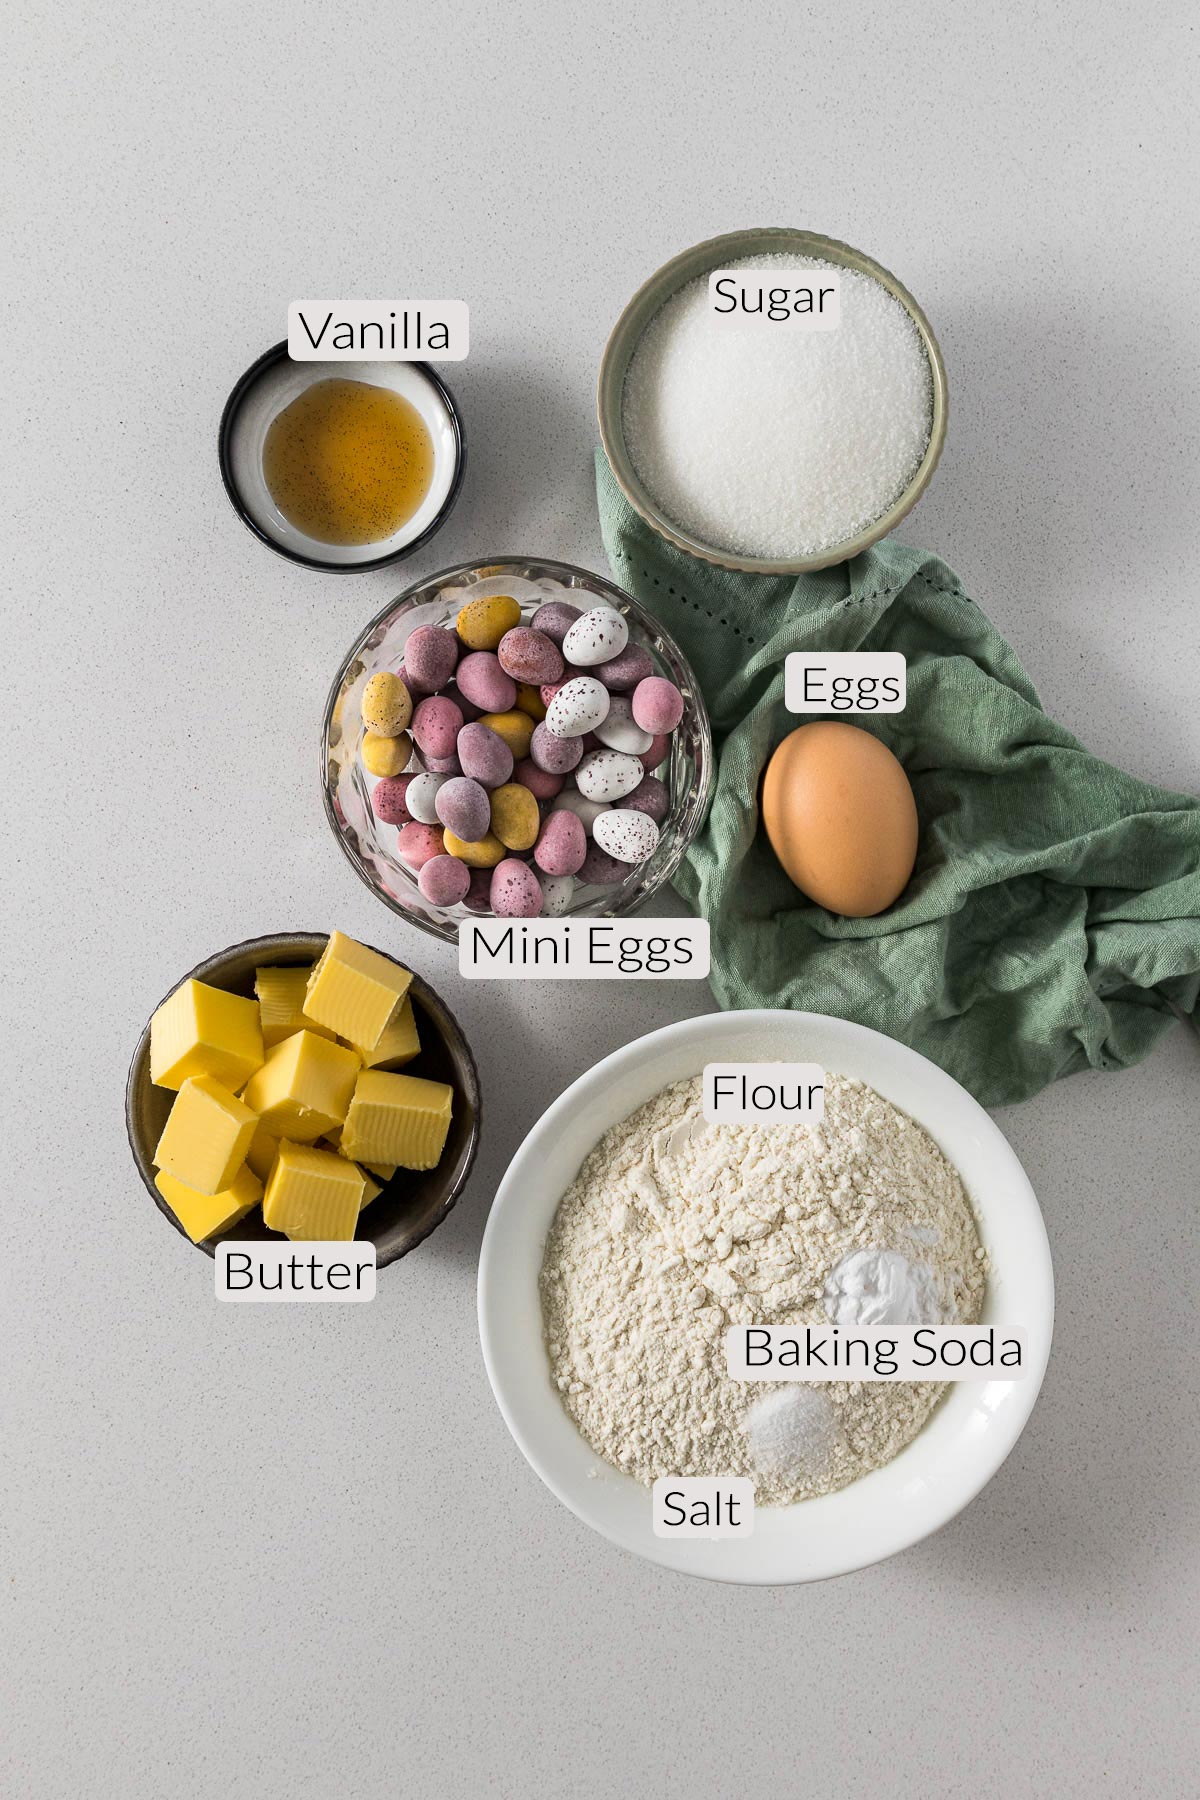 Mini eggs cookies ingredients - vanilla, sugar, mini eggs, eggs, butter, flour, baking soda, salt.